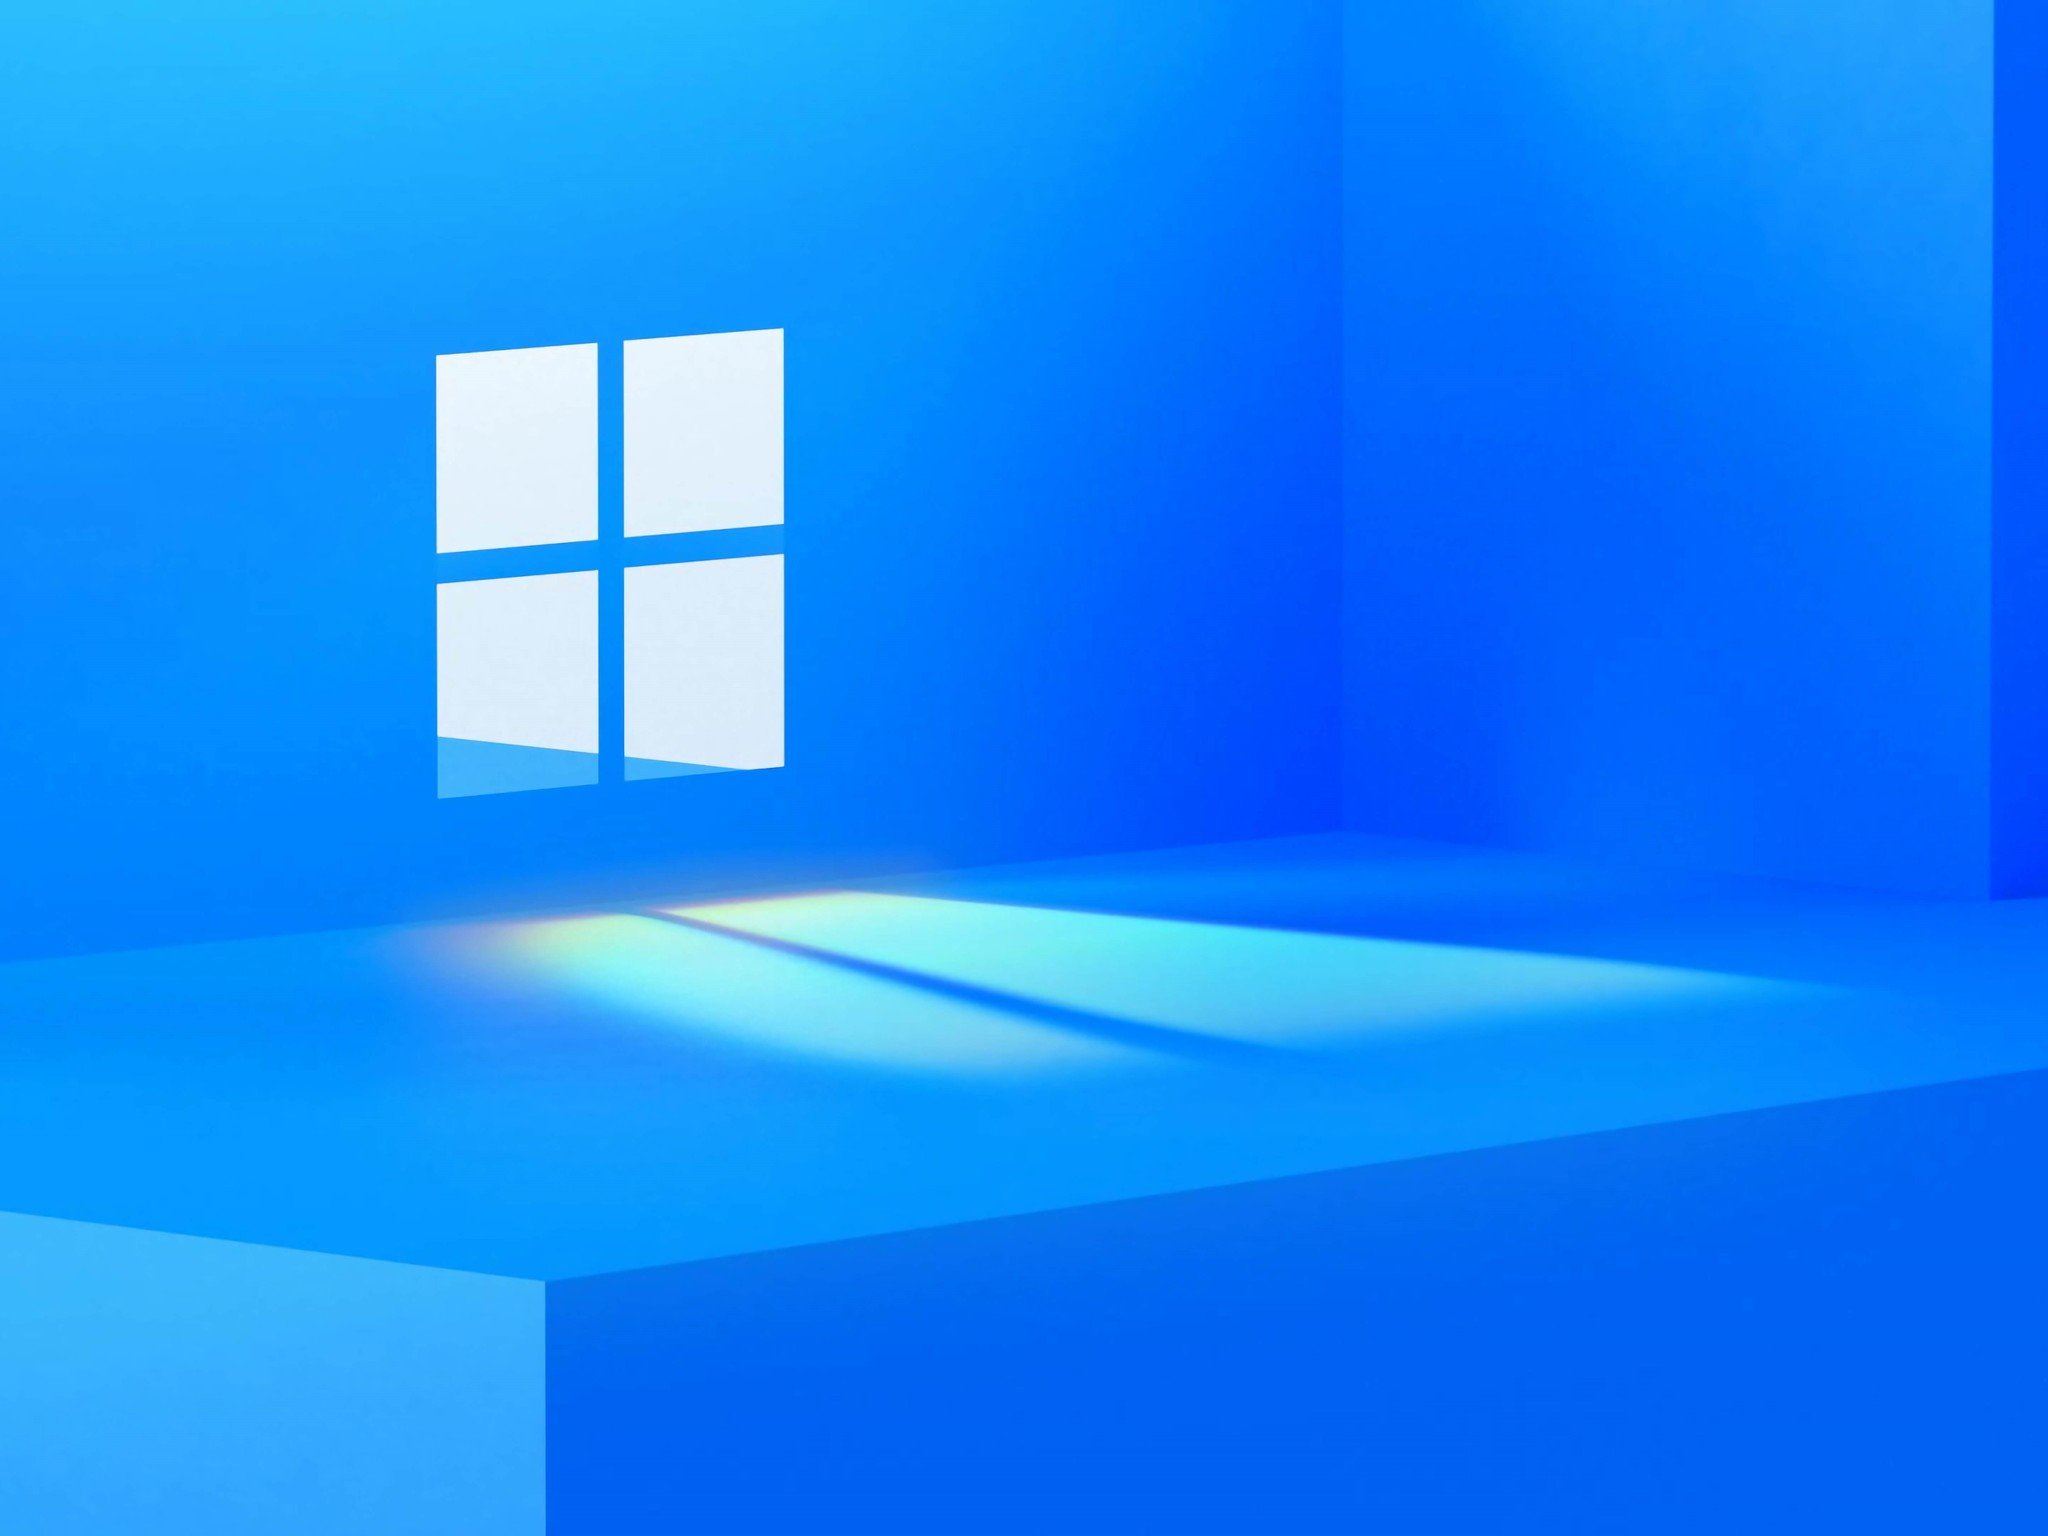 Windows 11 help, tips and tricks